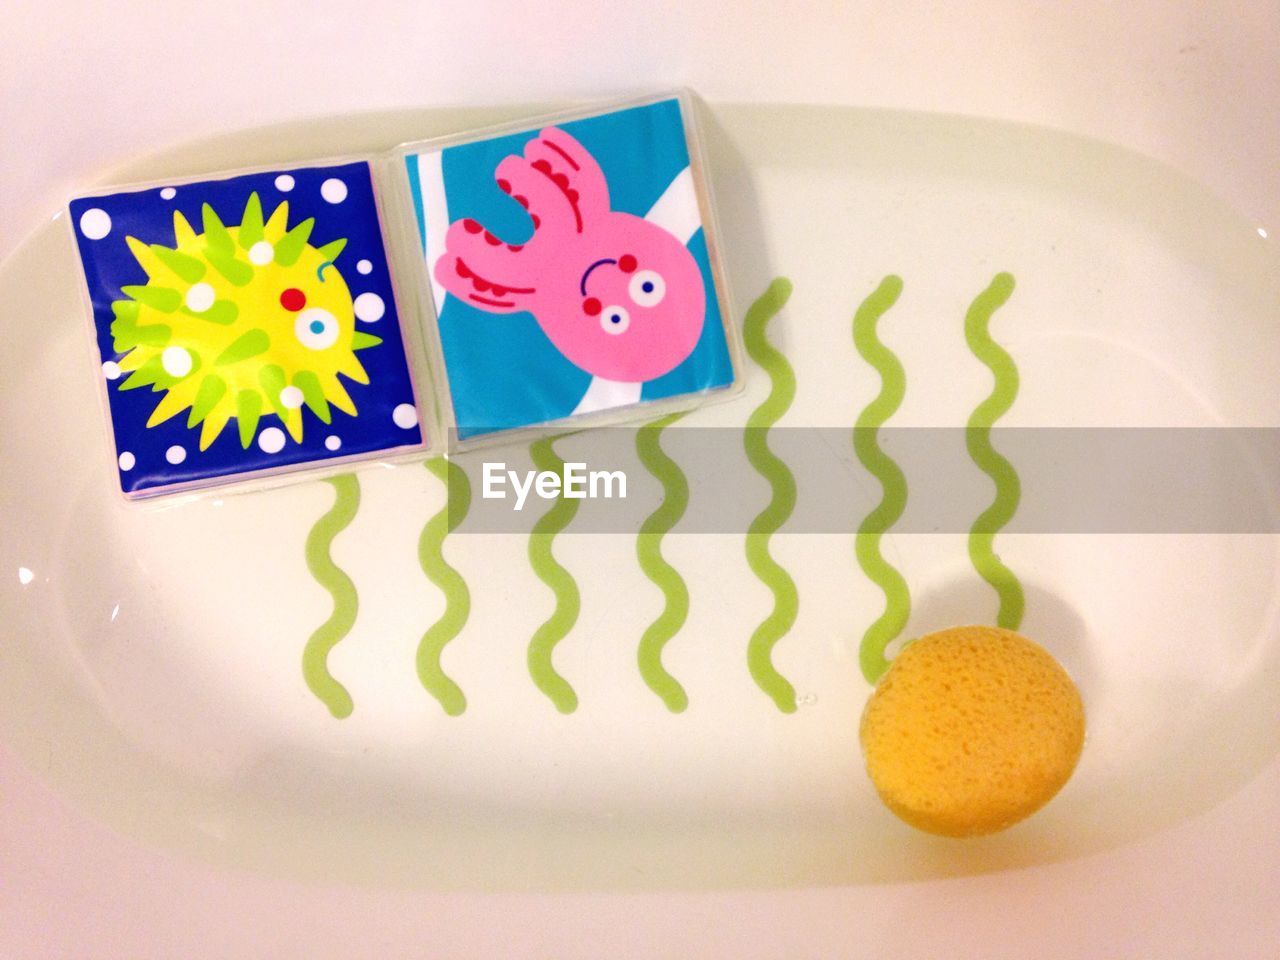 Toys floating in baby bathtub